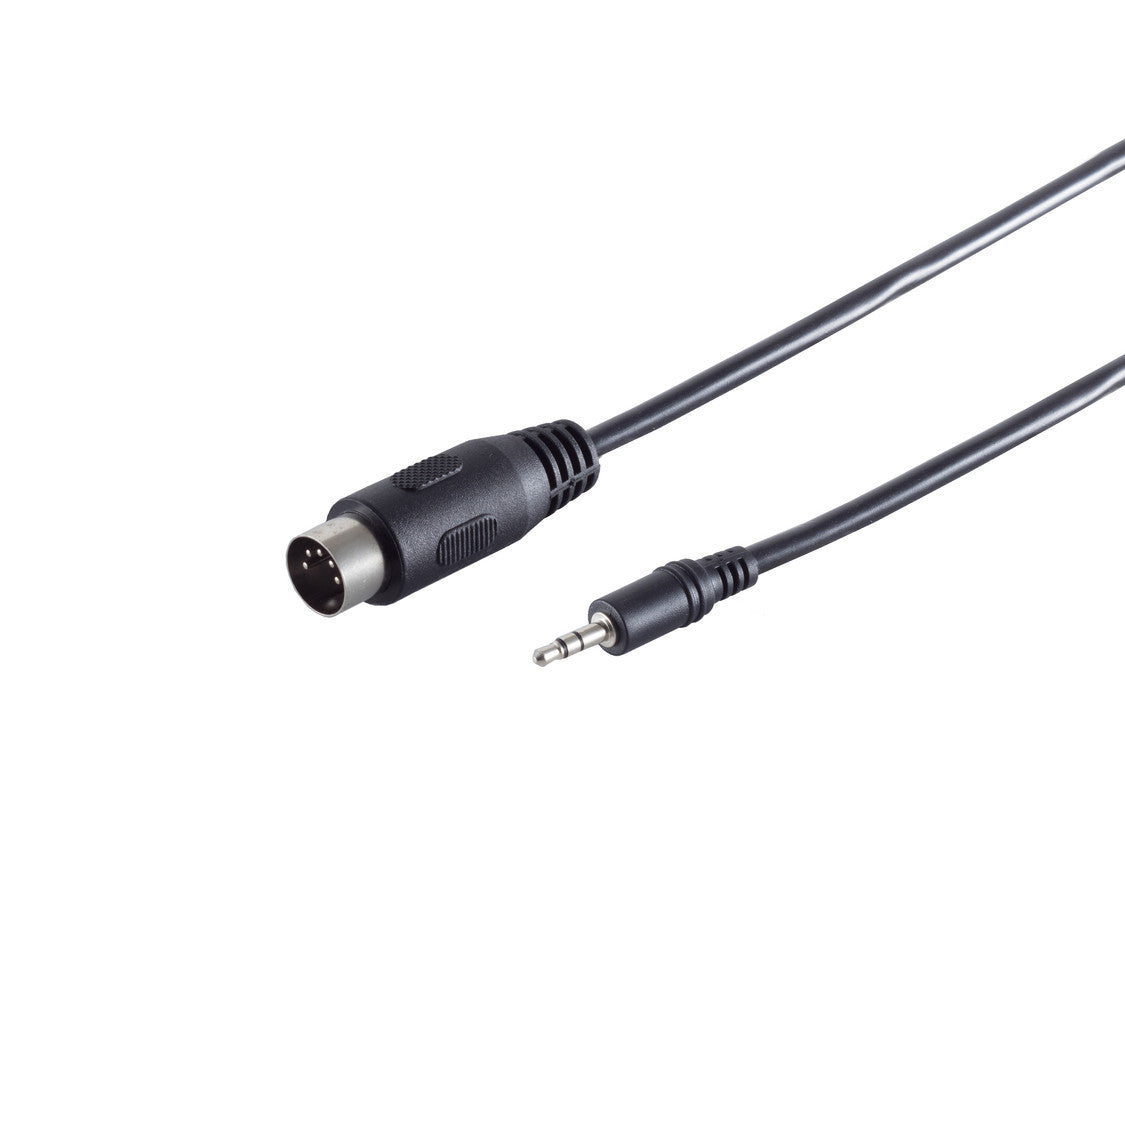 Stereo-Klinken- zu 5-poligem DIN-Kabel, 1,5m